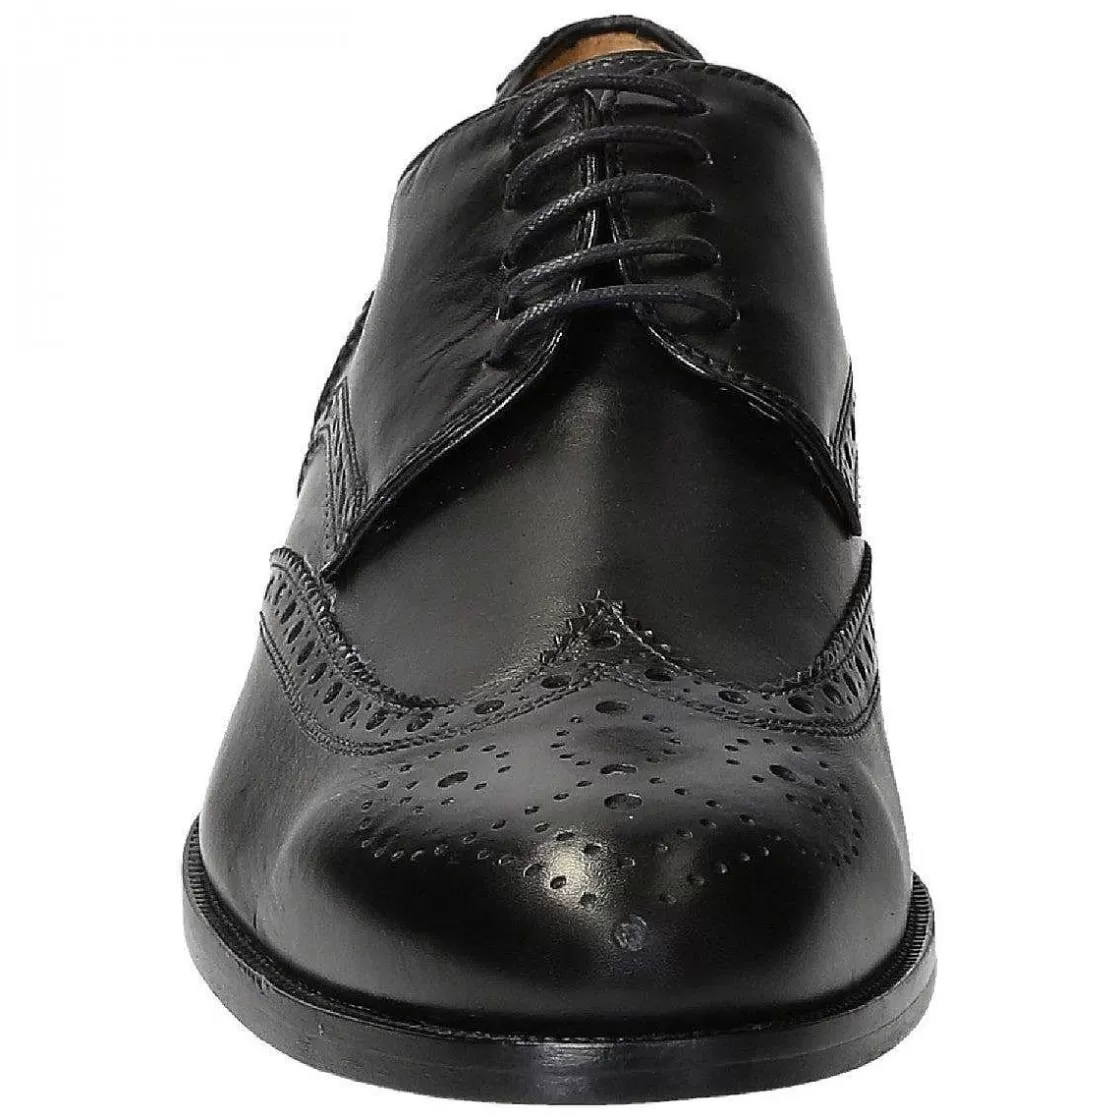 Leonardo Handmade Wingtip Brogues Derby Shoes In Black Leather Best Sale